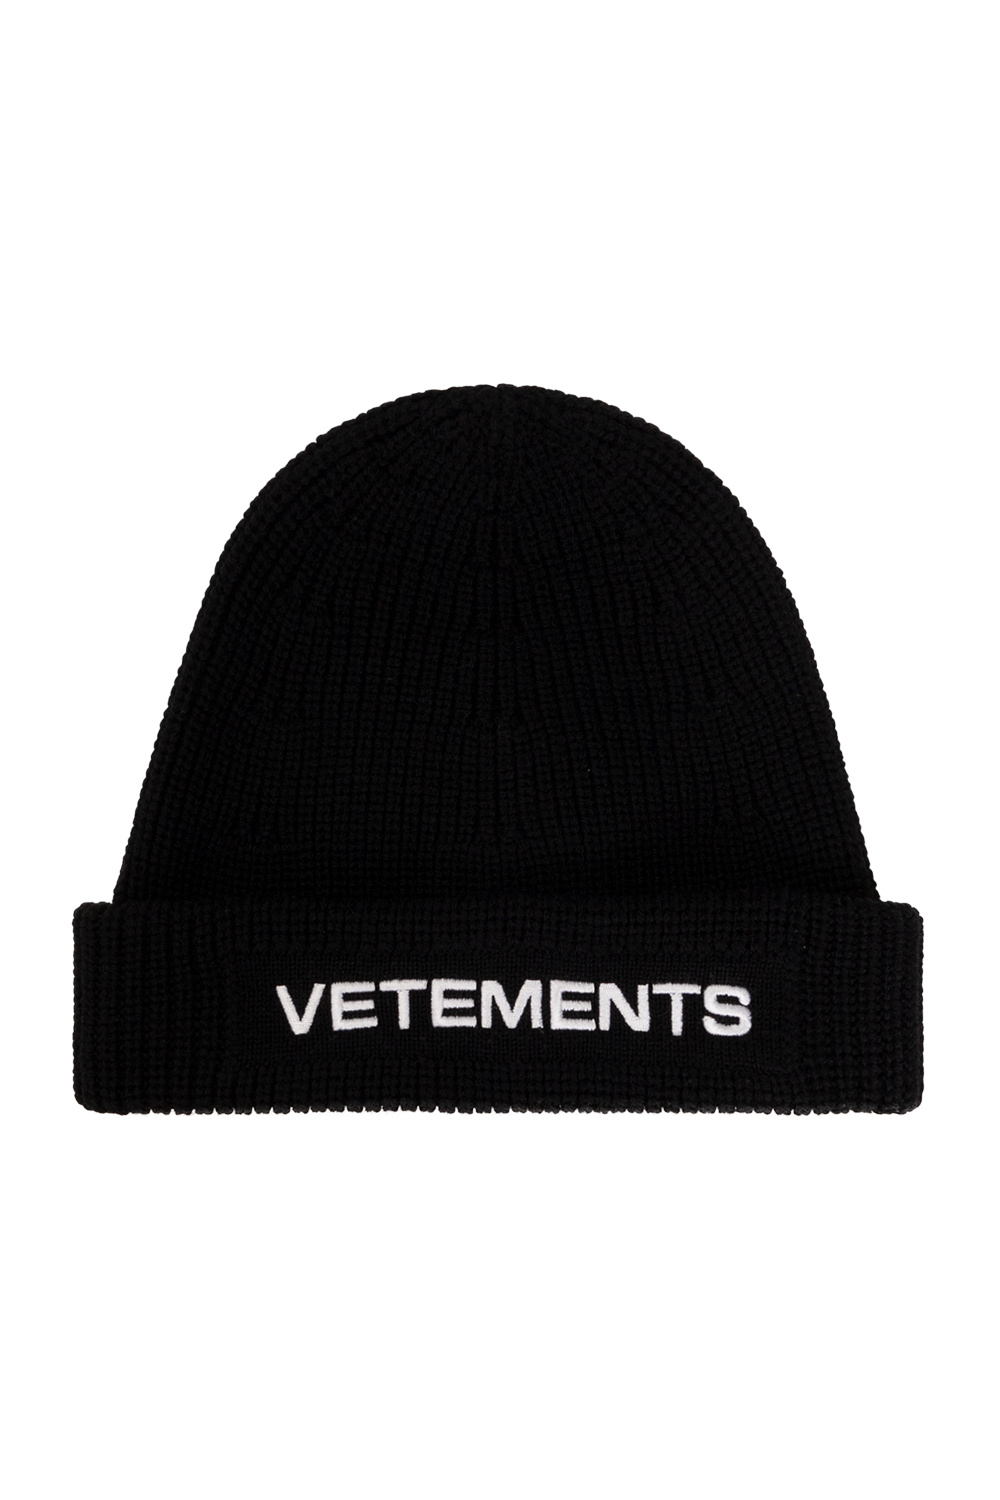 StclaircomoShops | a woven hat | Men's Accessorie | VETEMENTS Beanie with  logo